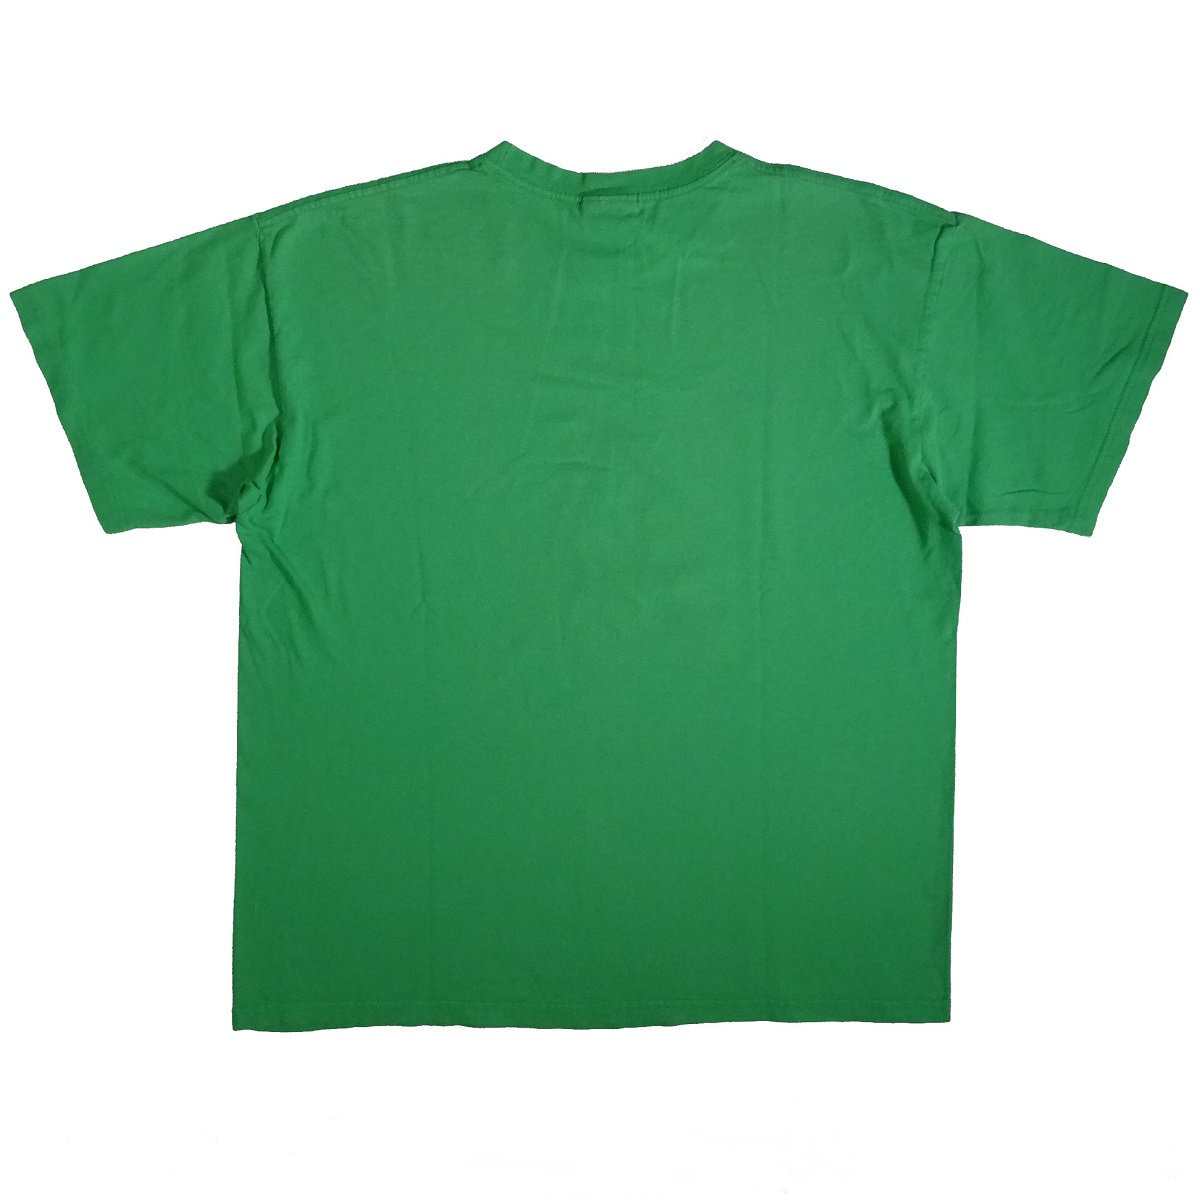 Charles Barkley Nike T-Shirt Vintage Size Large - Tarks Tees